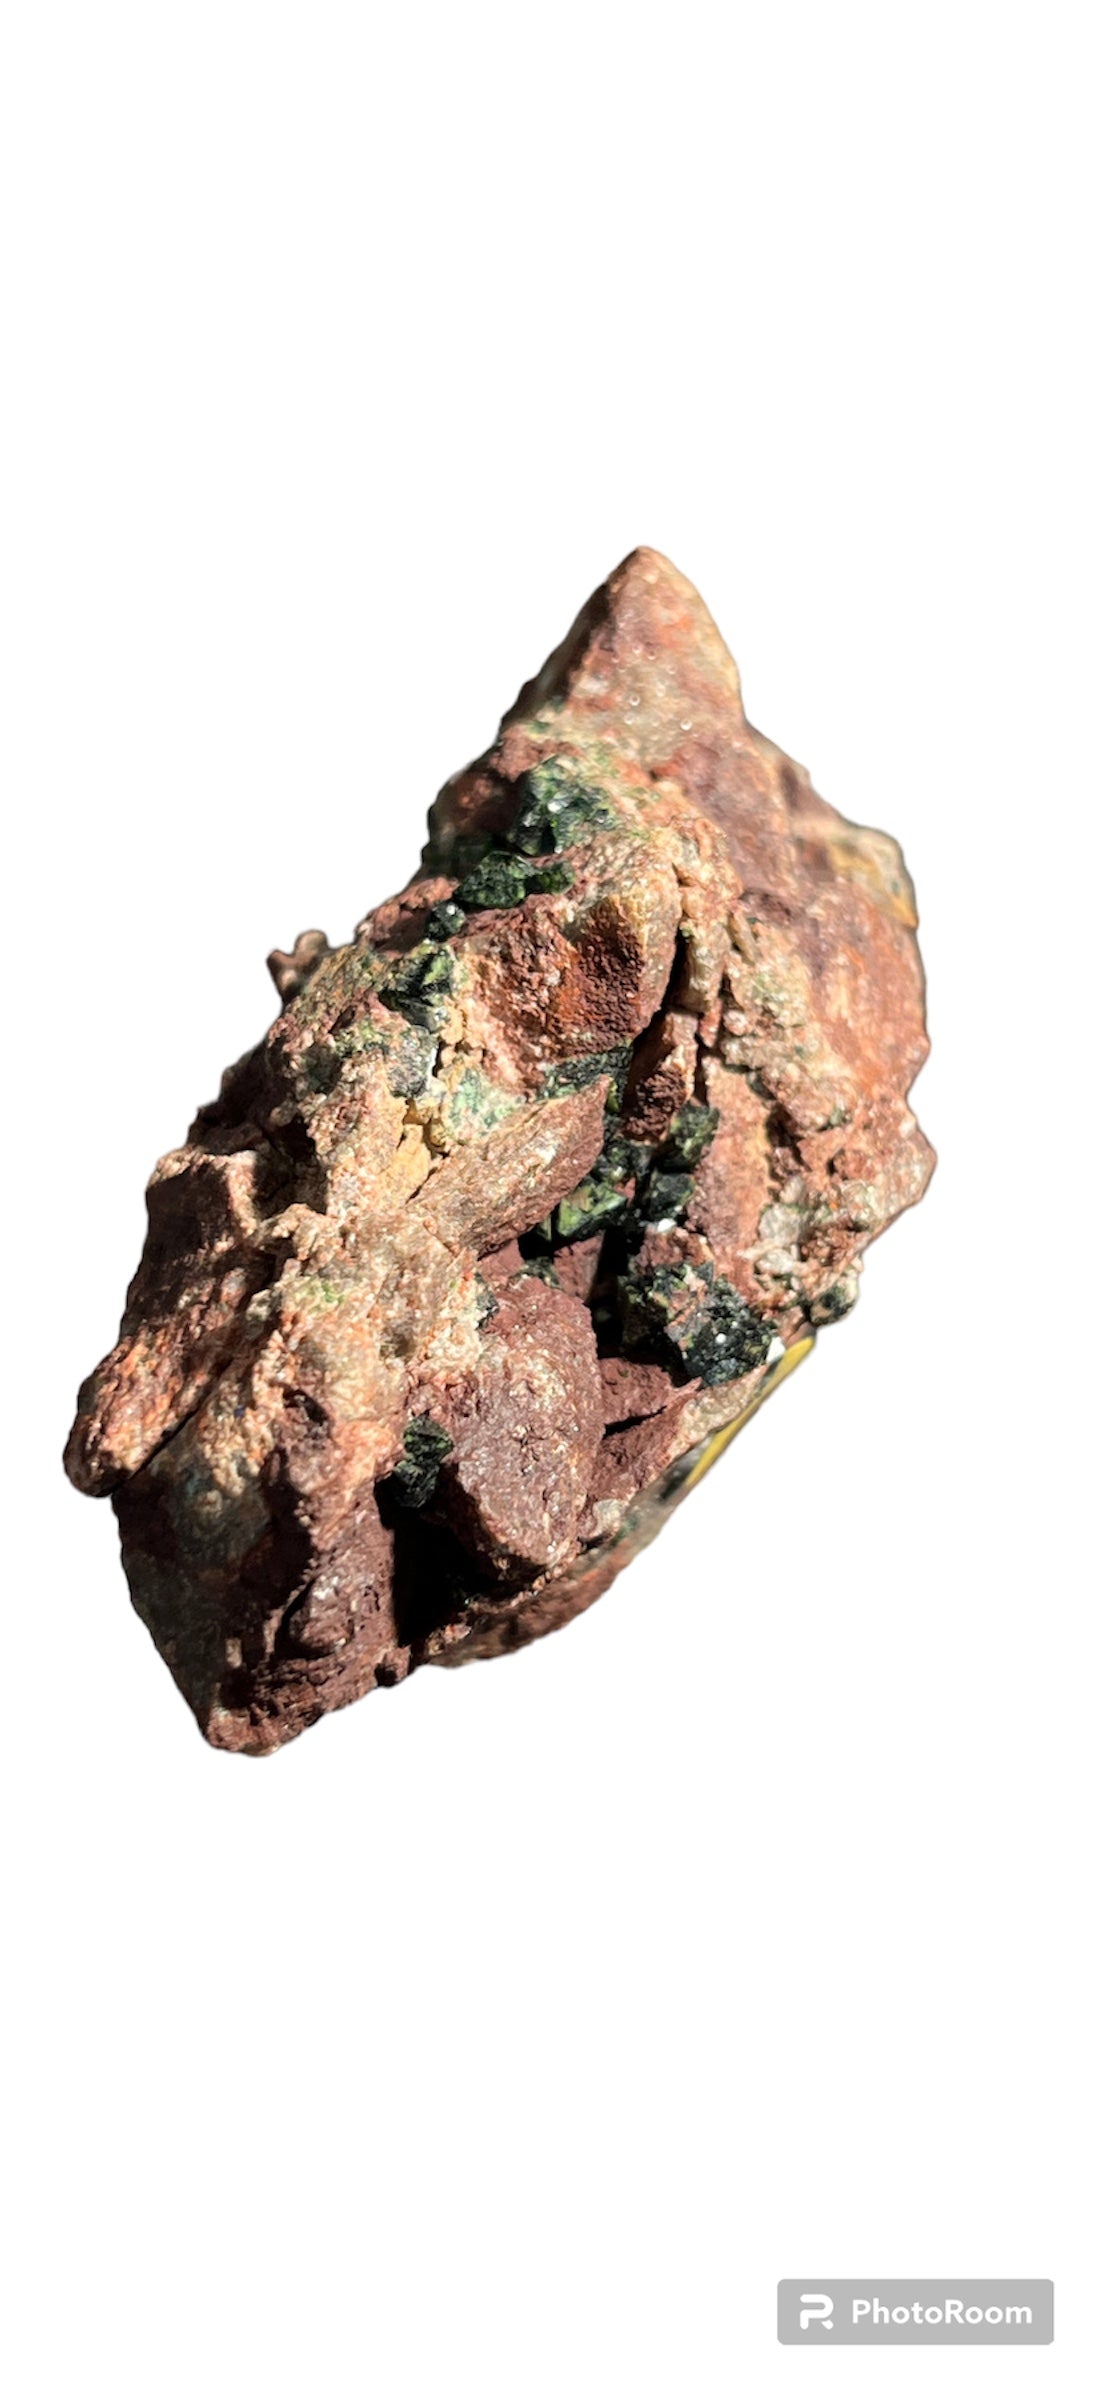 Libéthenite lualaba DR Congo M18S164